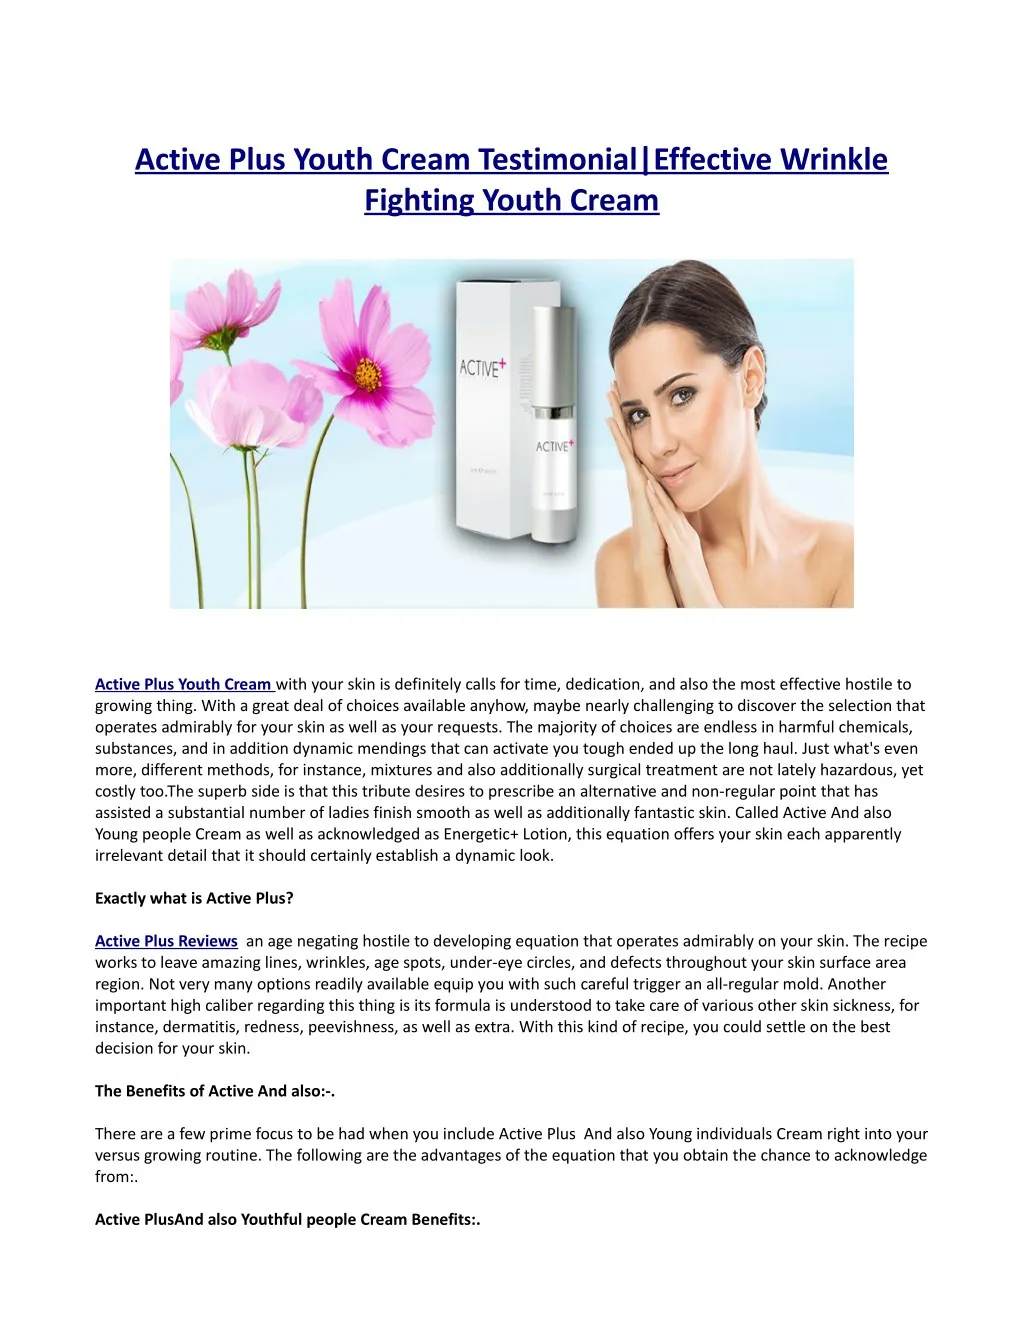 active plus youth cream testimonial effective